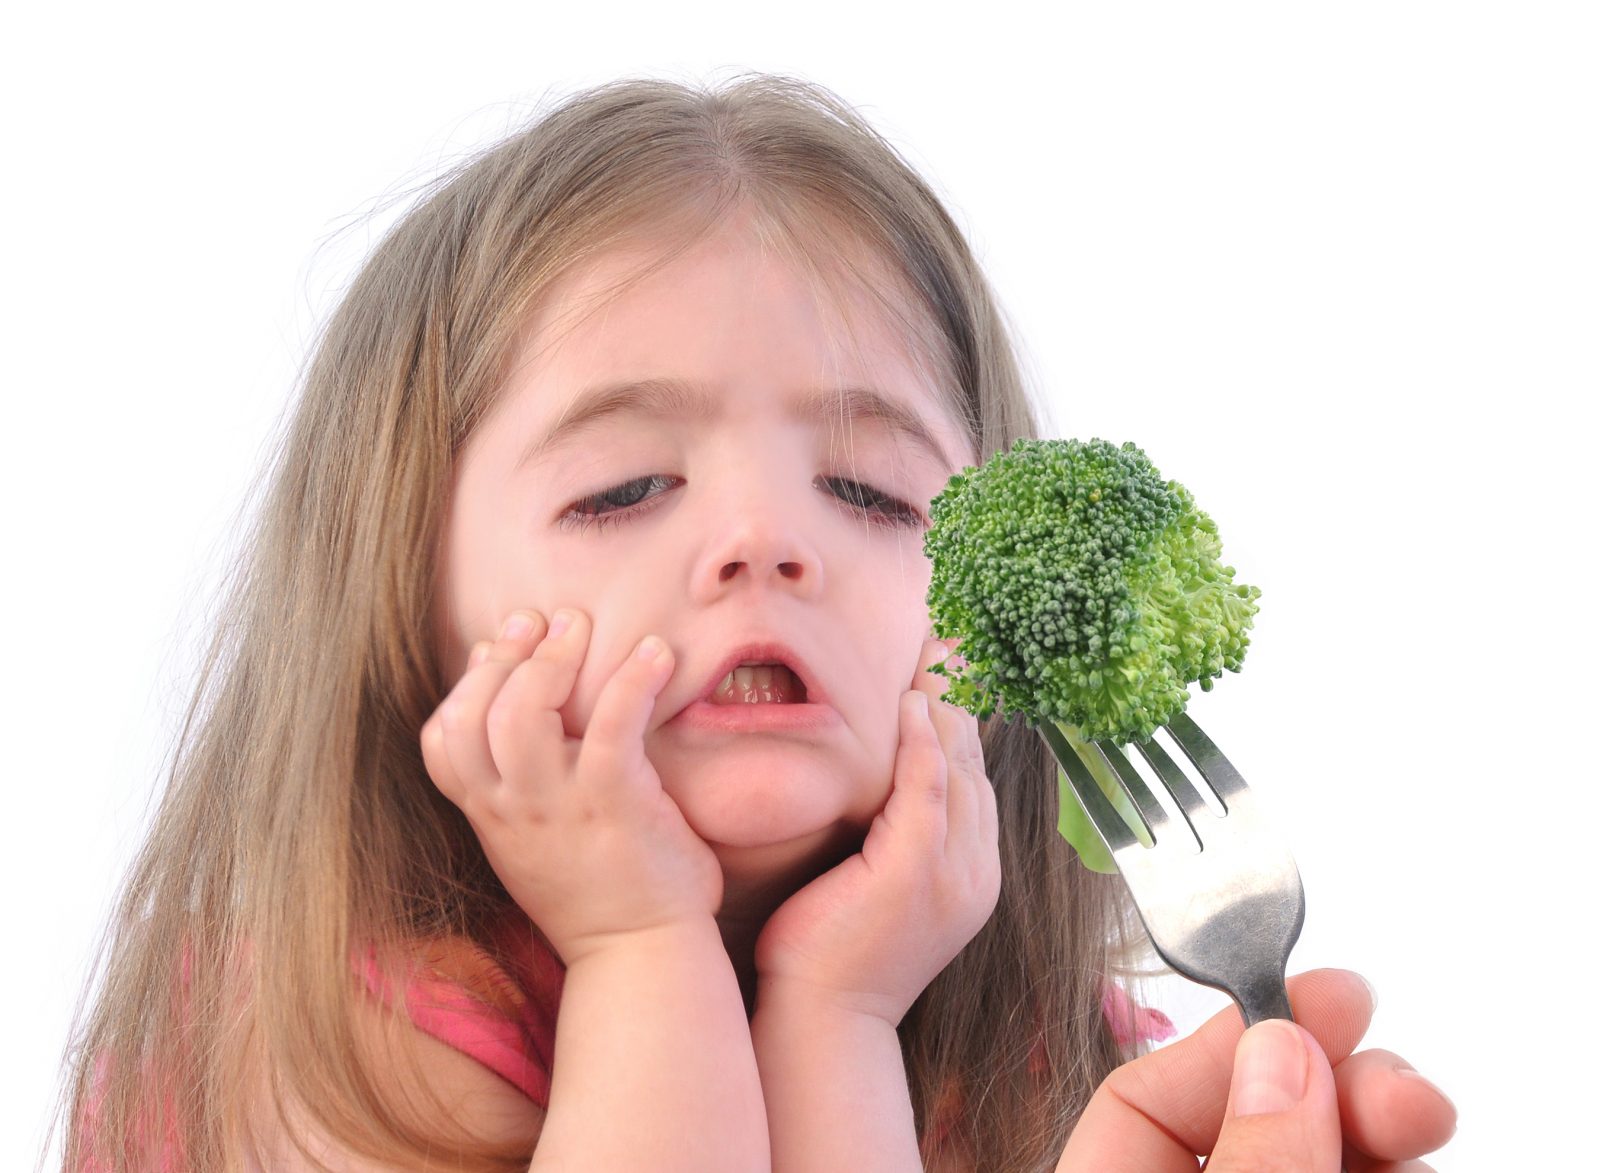 large - girl broccoli veggies